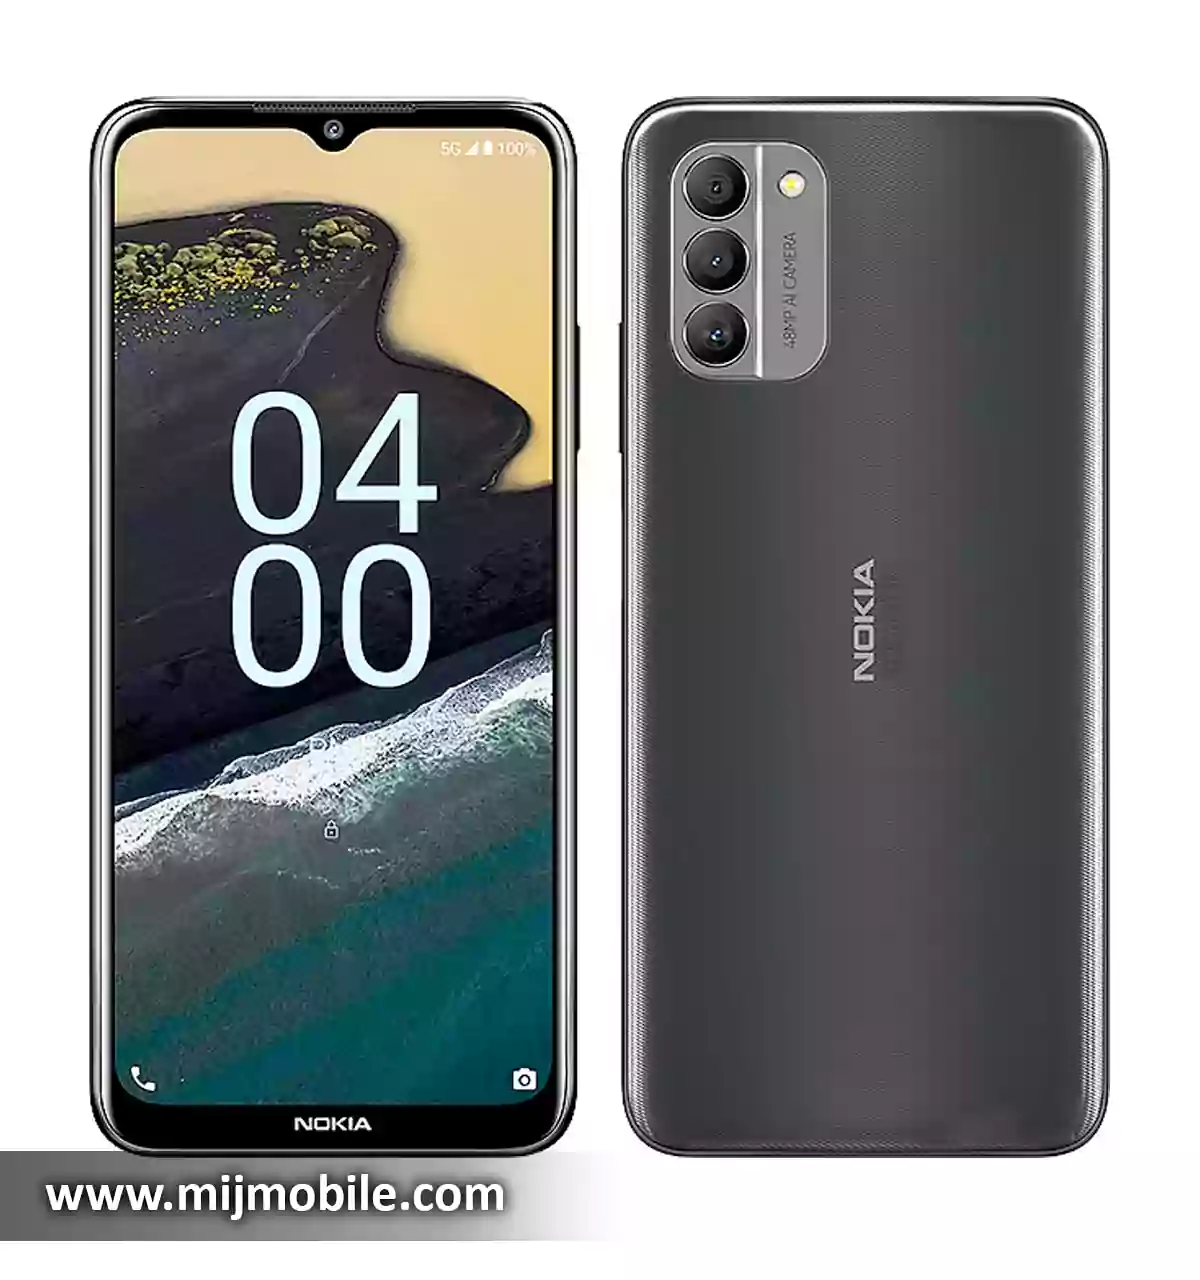 Nokia G400 Price in Pakistan